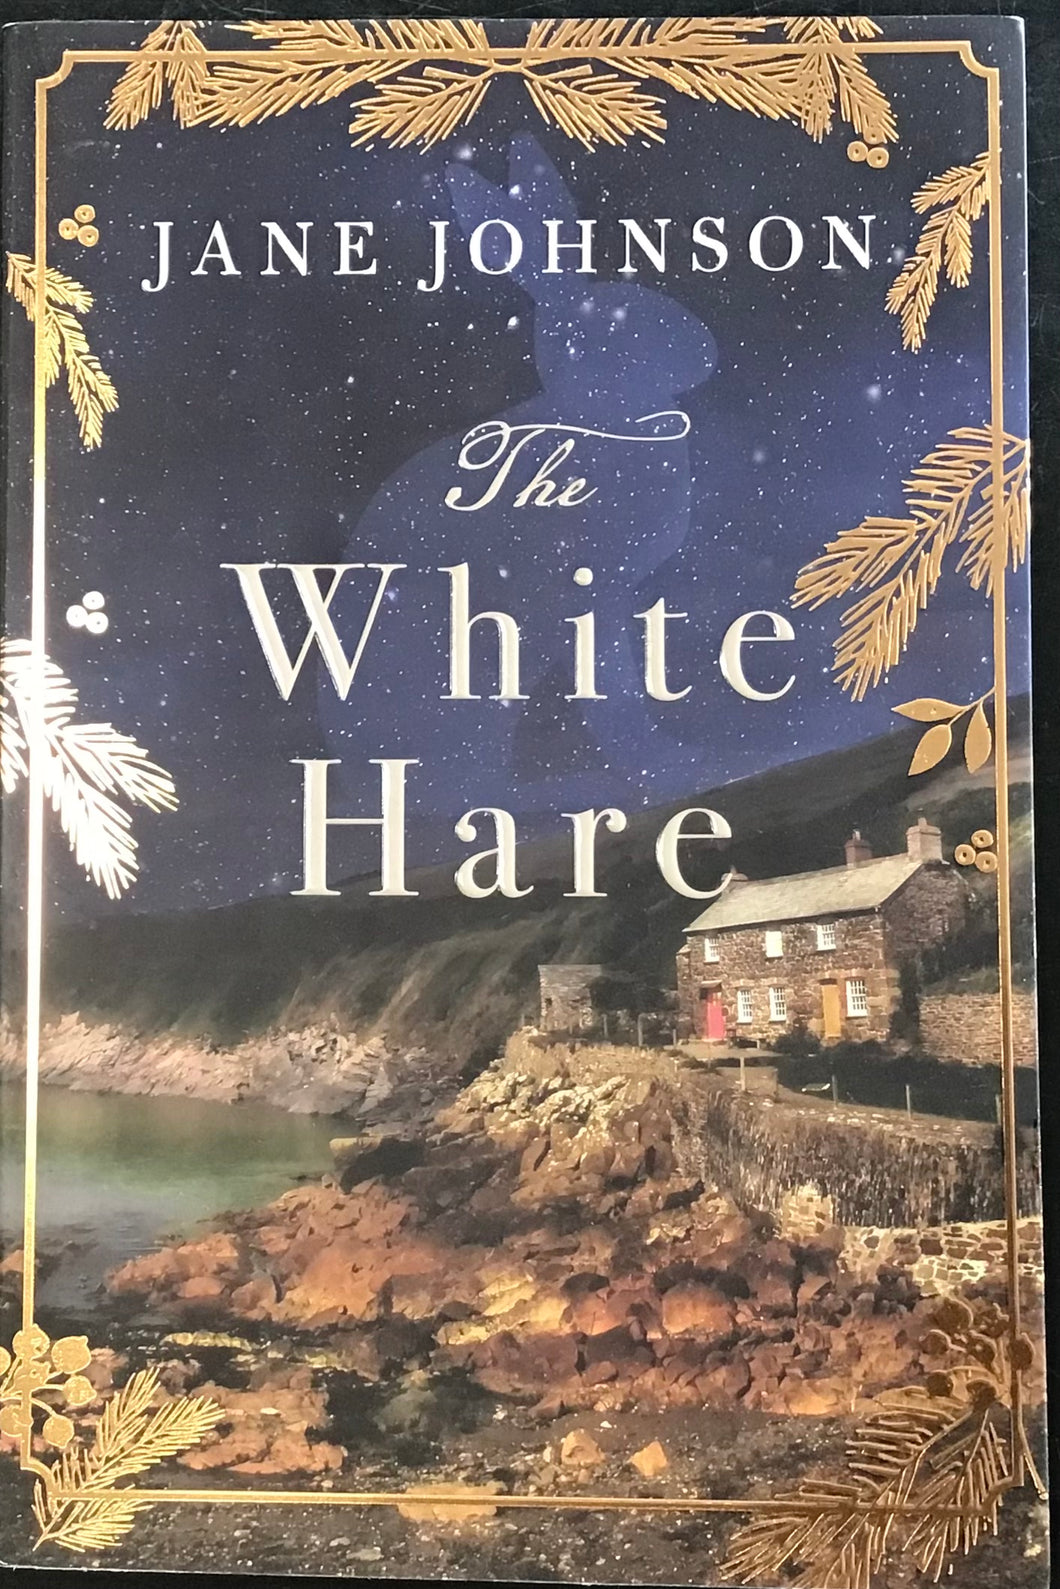 The White Hare, Jane Johnson